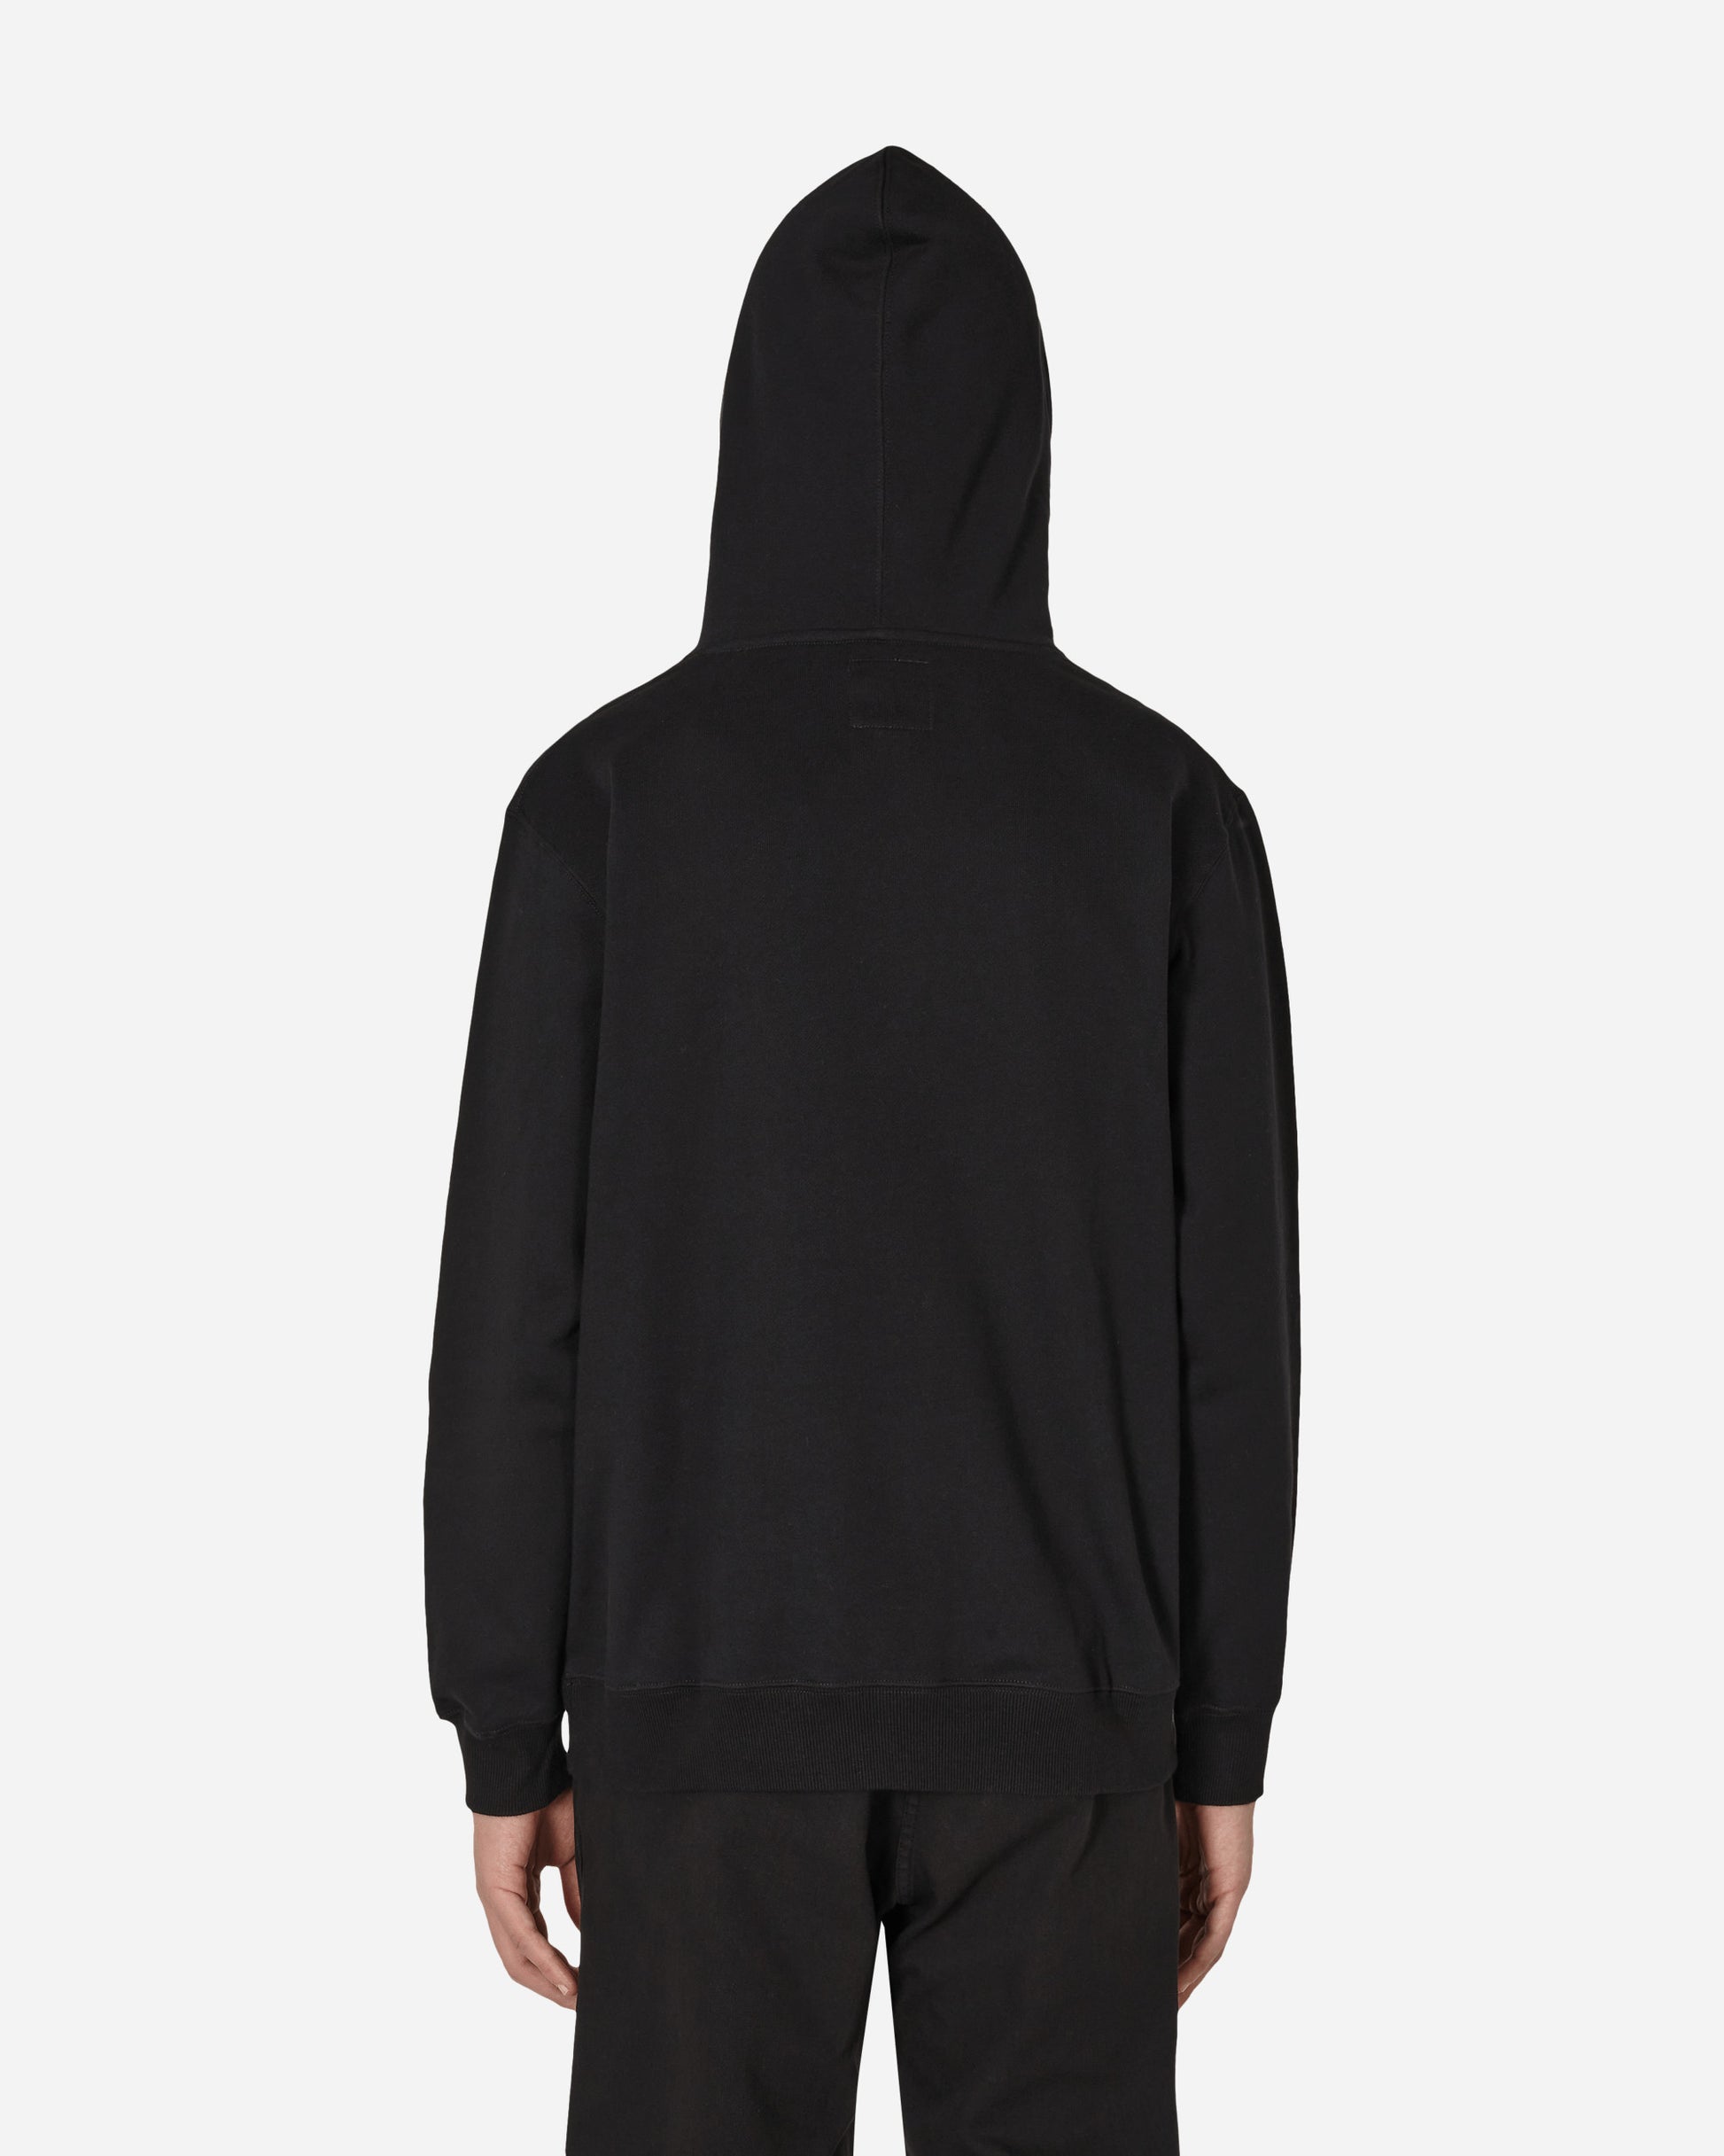 Gramicci One Point Hooded Sweatshirt Black Sweatshirts Hoodies G303-FT BLACK